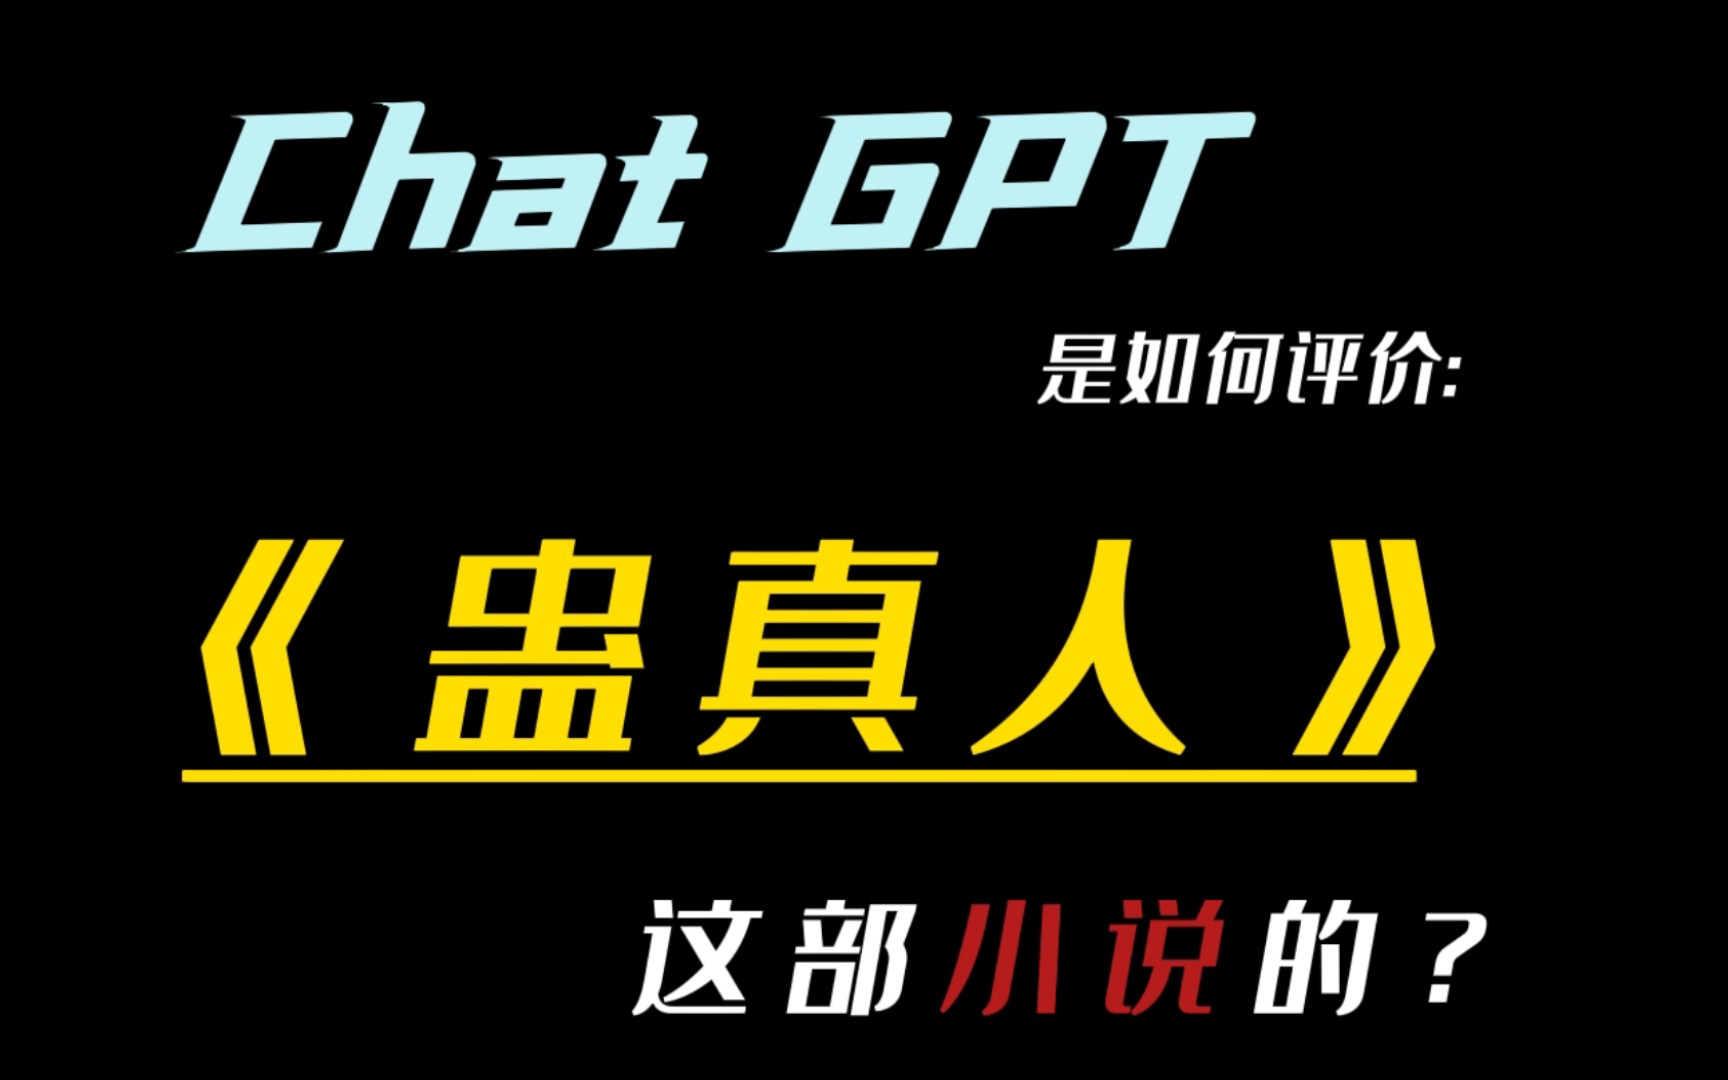 chat GPT 是如何评价《蛊真人》的？